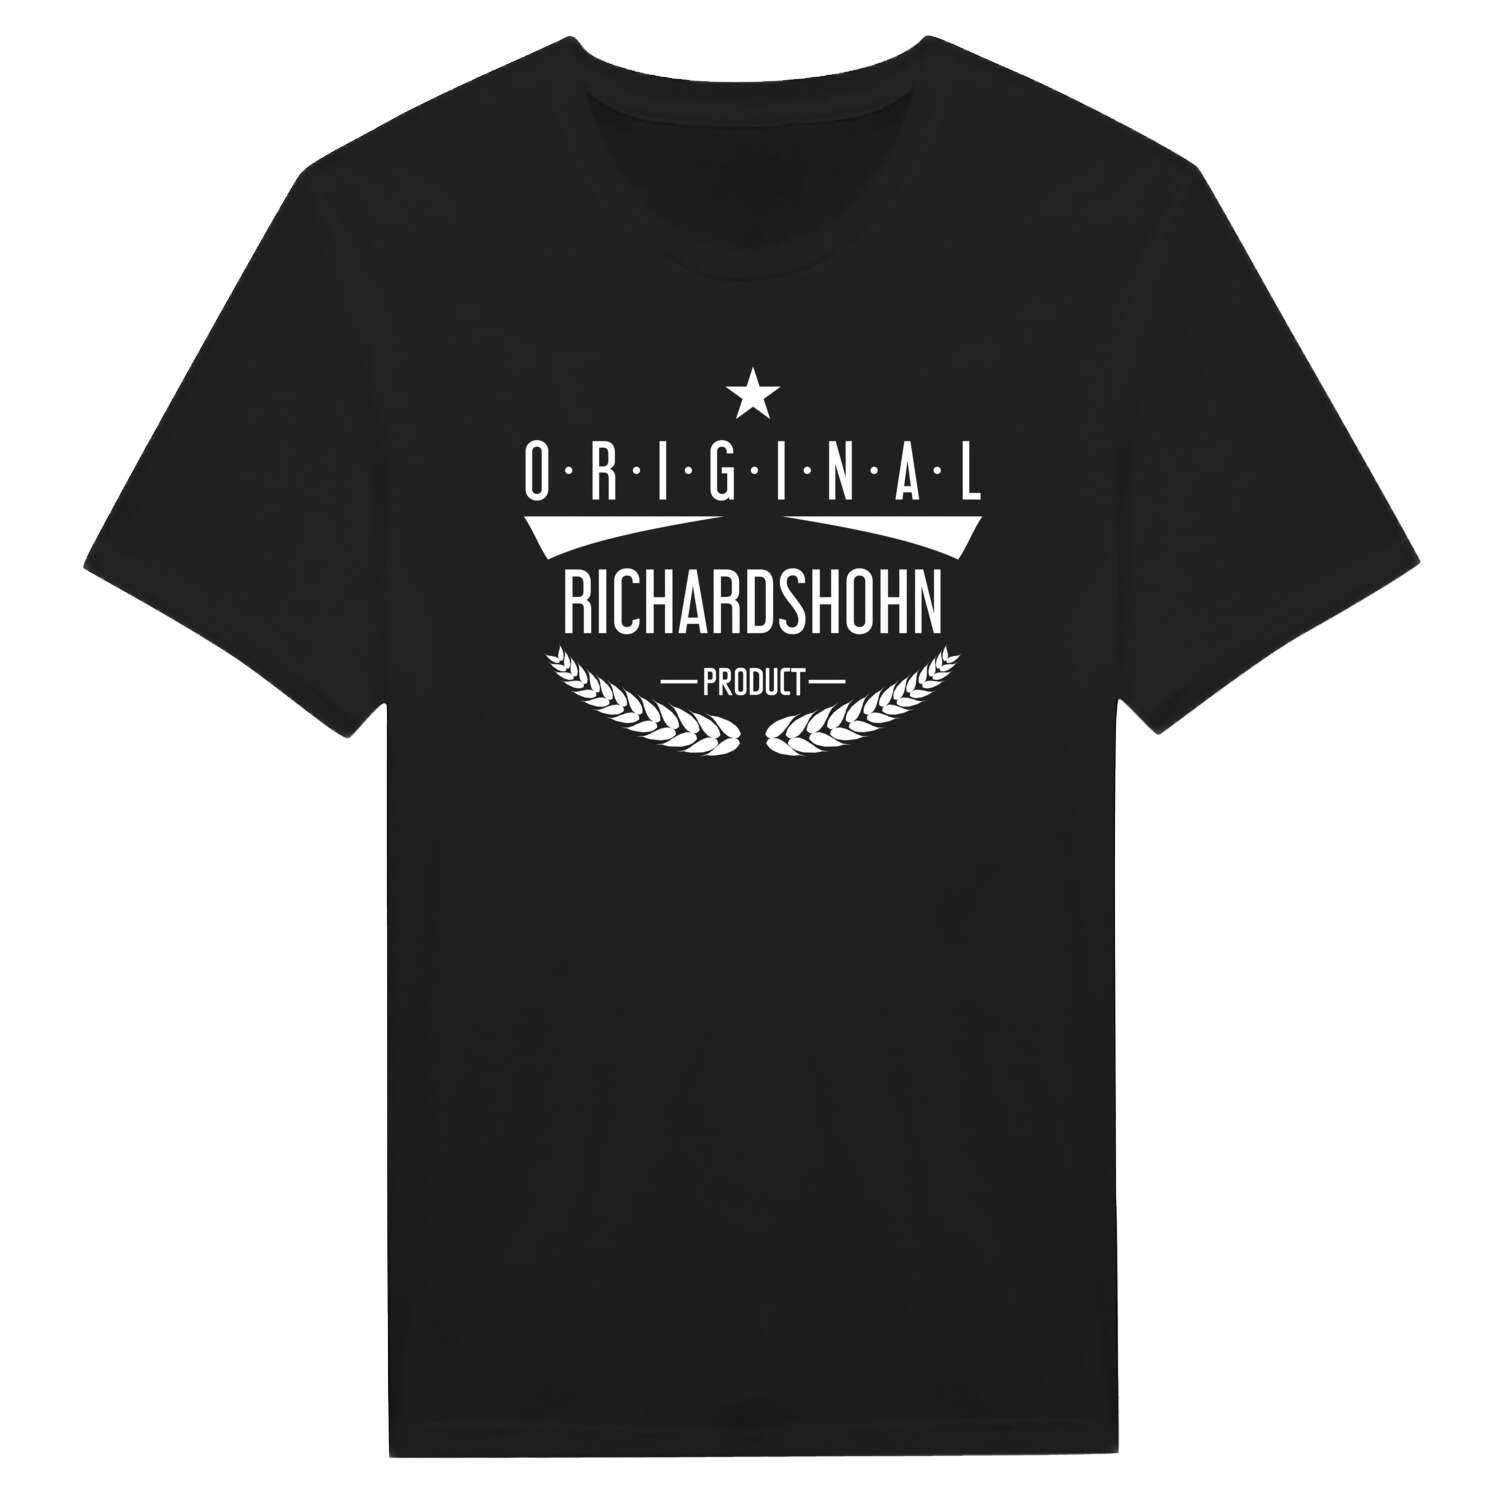 Richardshohn T-Shirt »Original Product«